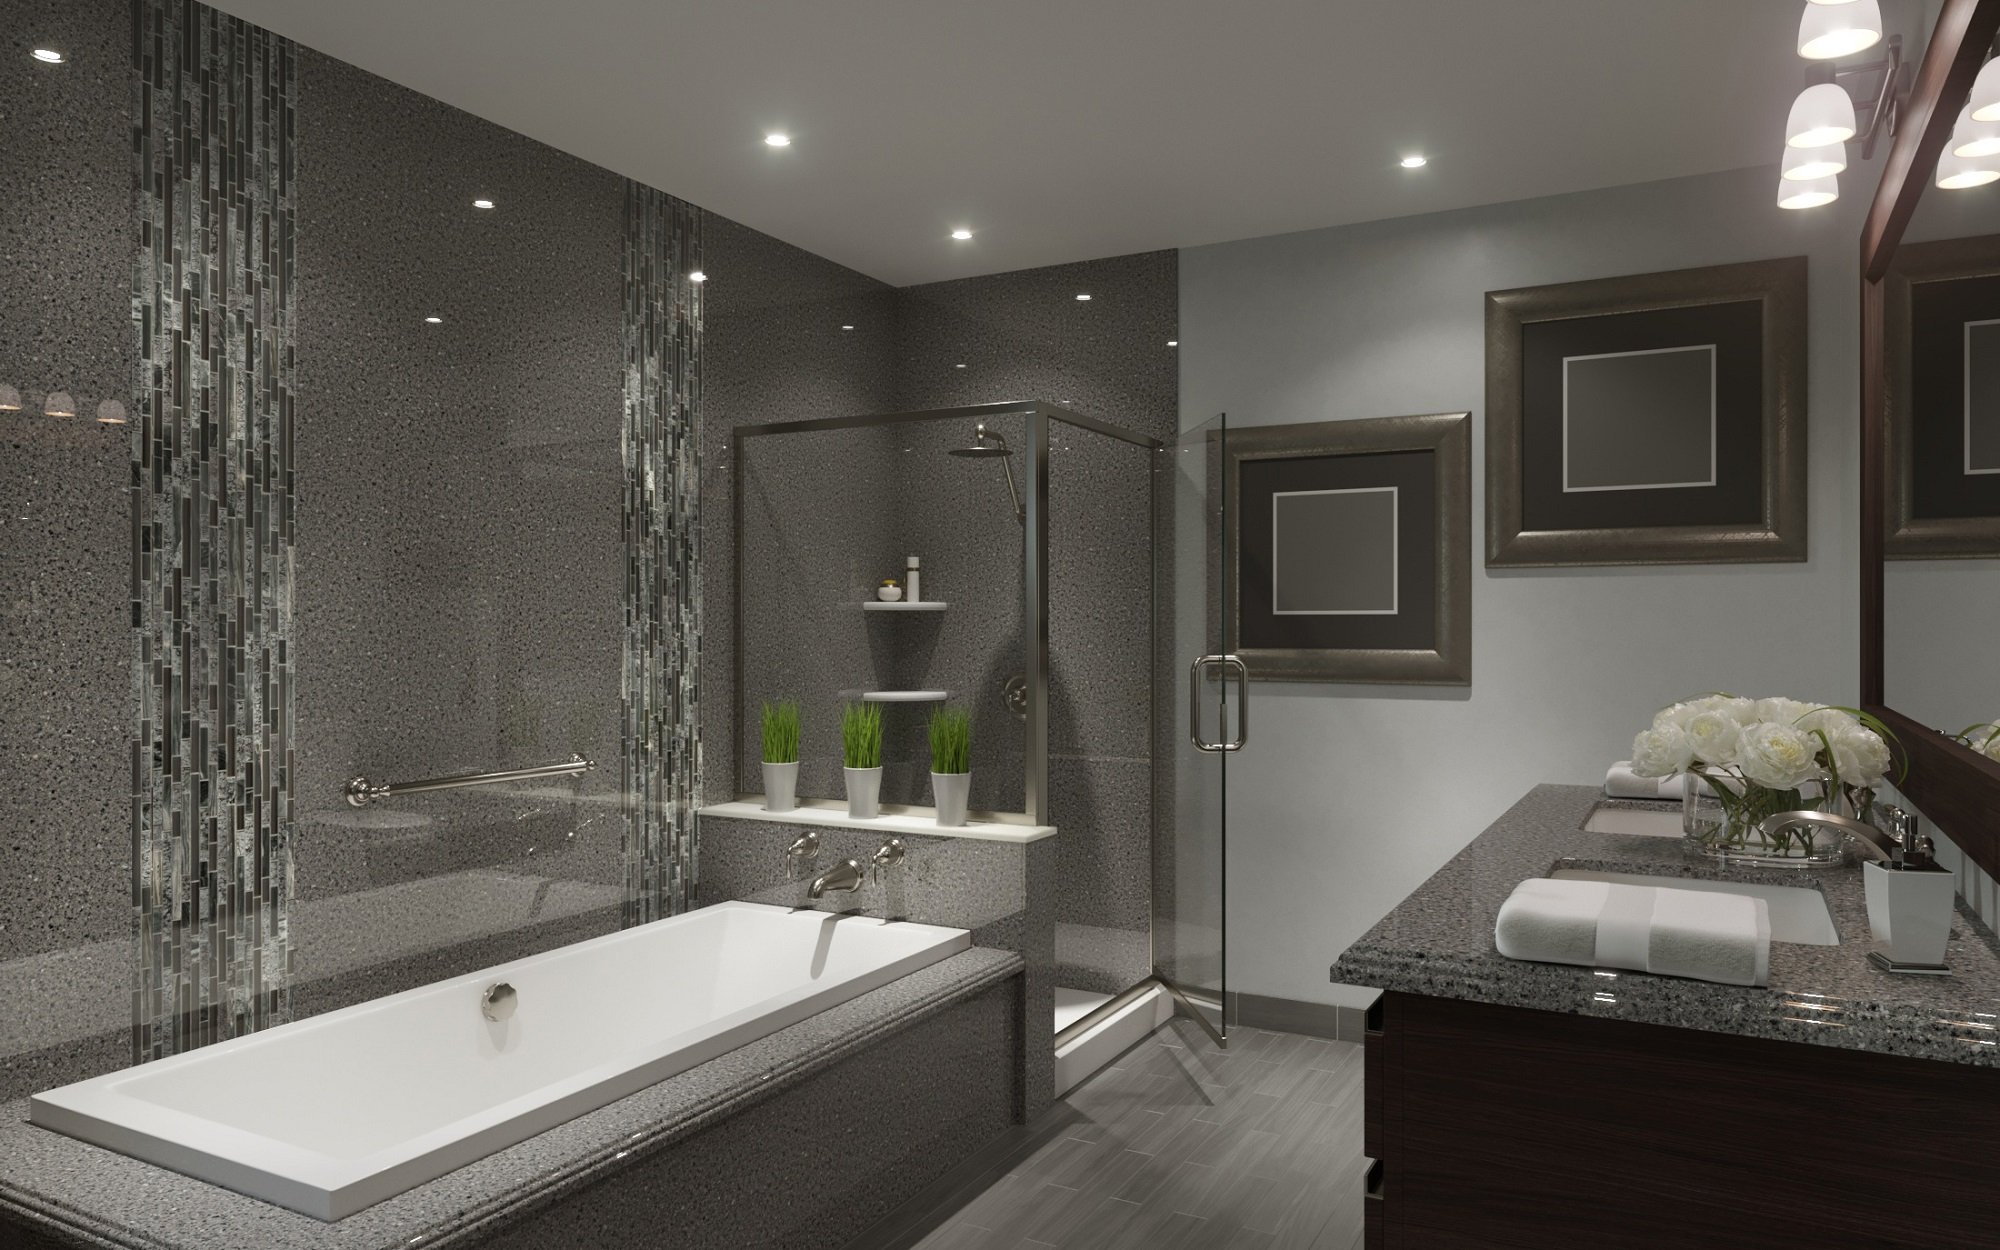 Top Burr Ridge Home Improvement Expert Offers Full-Scale Bathroom Renovation